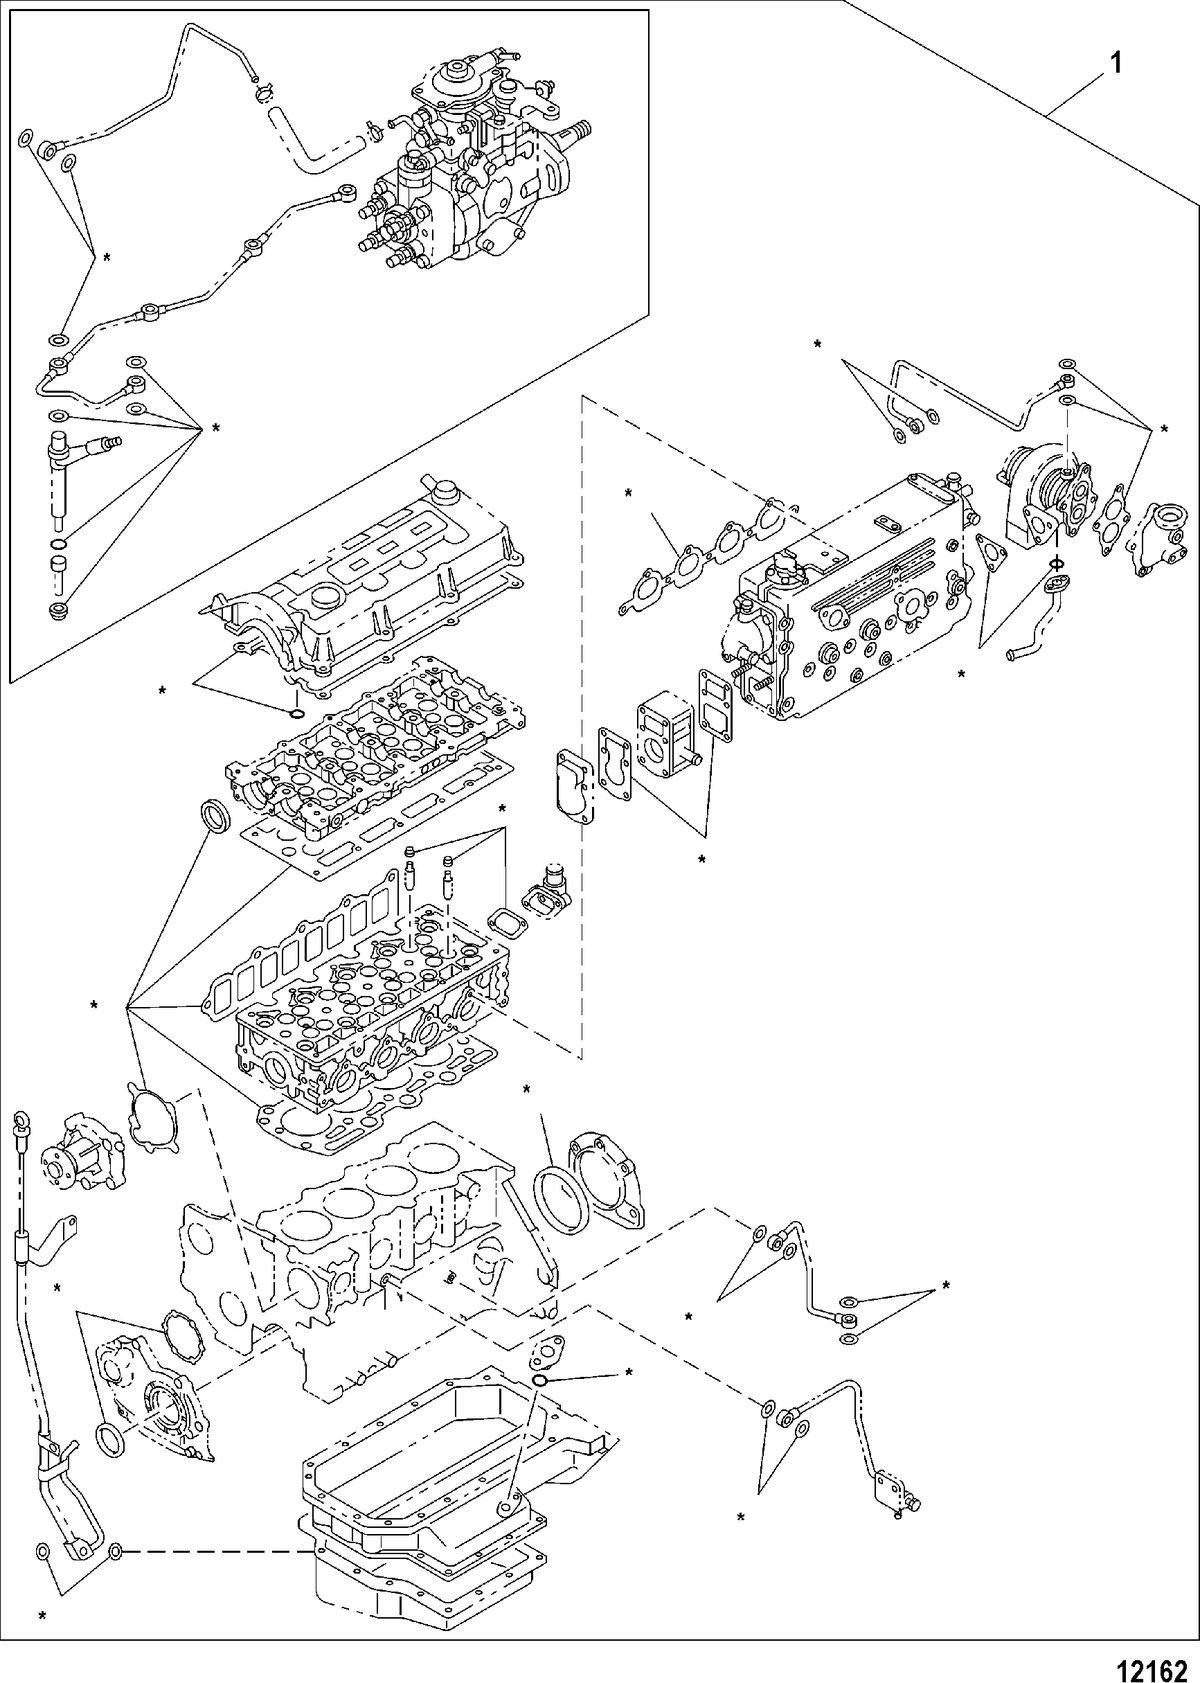 MERCRUISER CUMMINS/MERCRUSER DIESEL 1.7L-120 Service Kit - Gasket Set, ENGINE OVERHAUL